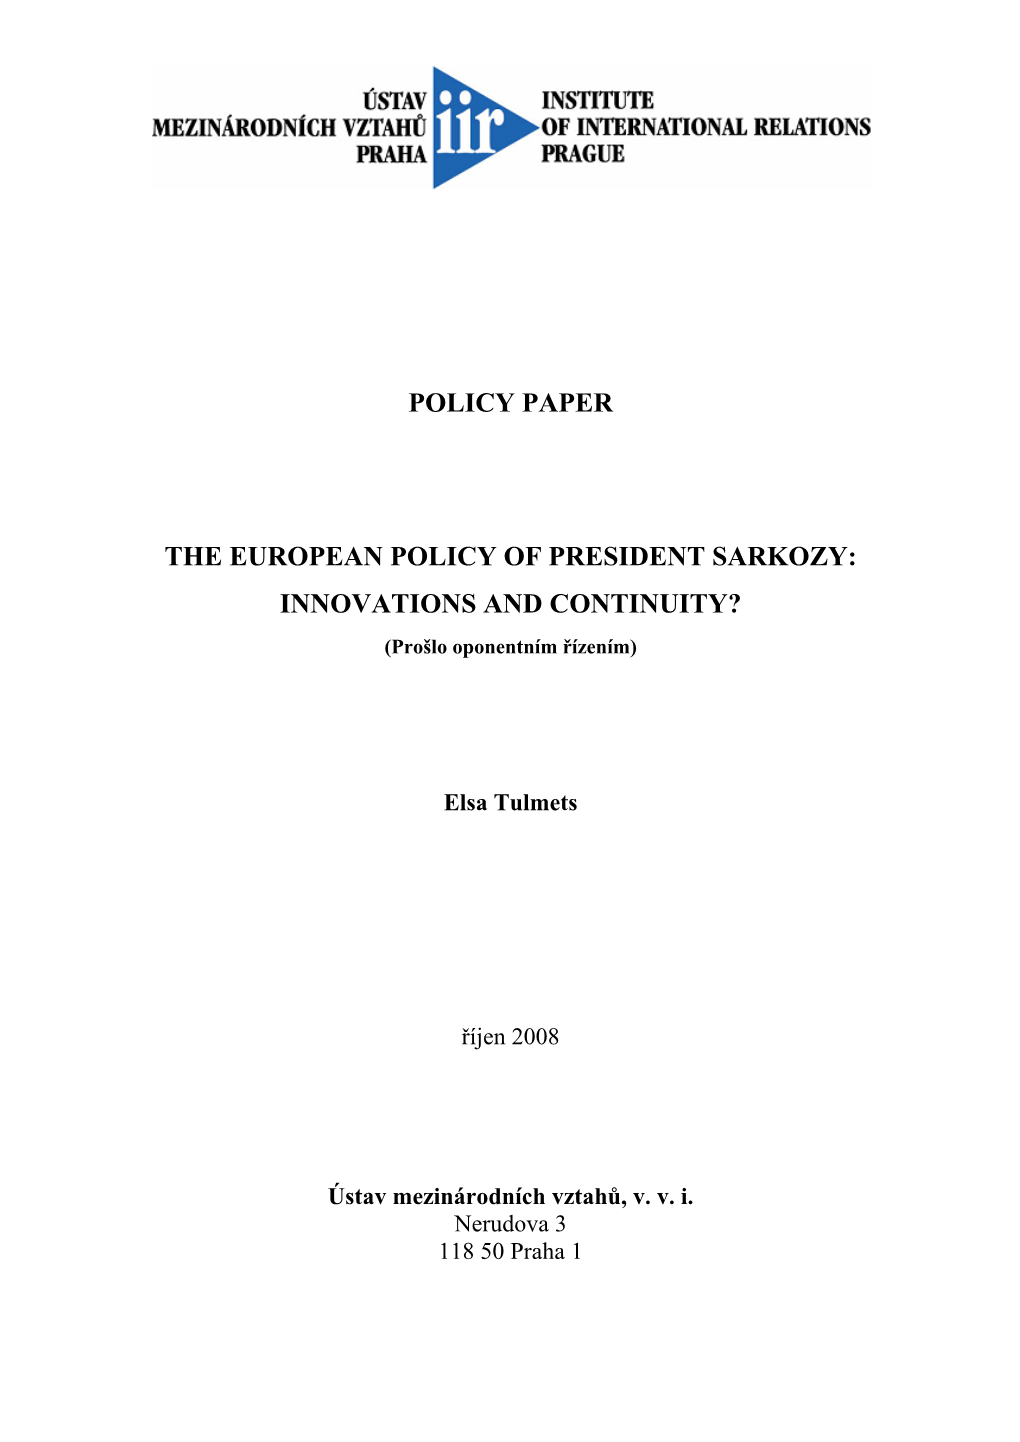 THE EUROPEAN POLICY of PRESIDENT SARKOZY: INNOVATIONS and CONTINUITY? (Prošlo Oponentním Řízením)